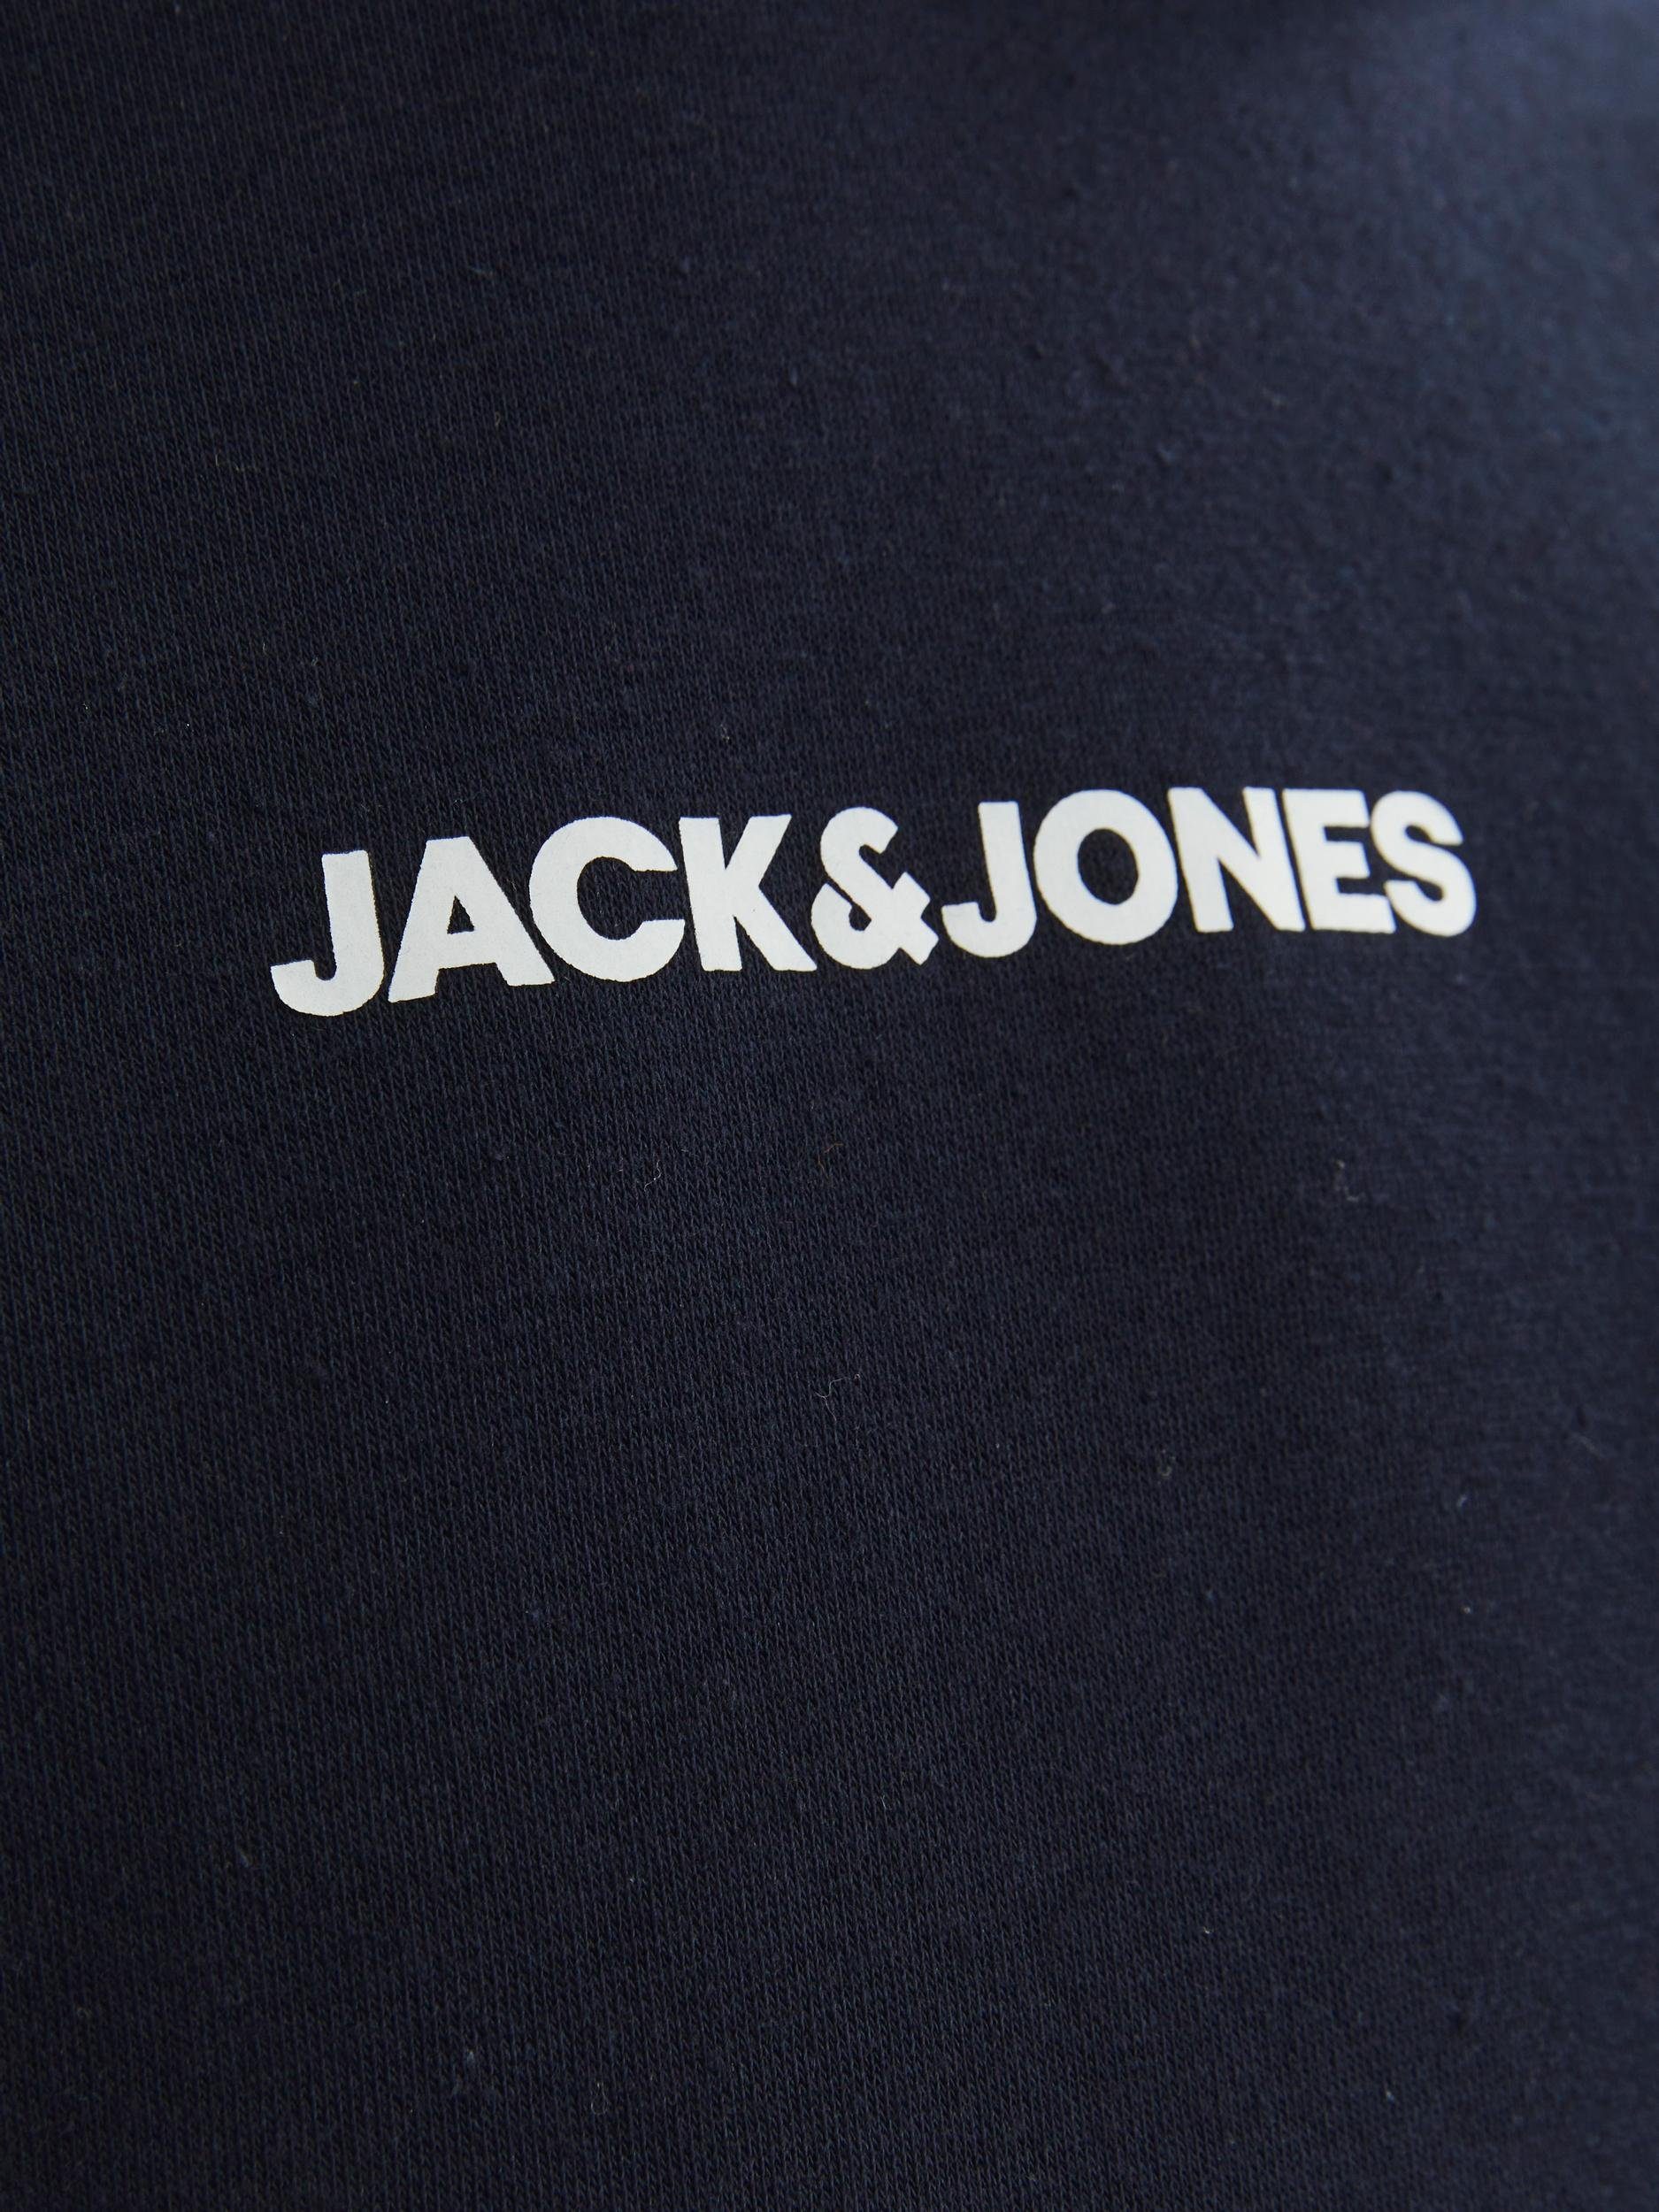 BLOCKING Jack & Navy HOOD JJEREID Jones Junior Hoodie JNR SWEAT Blazer SN